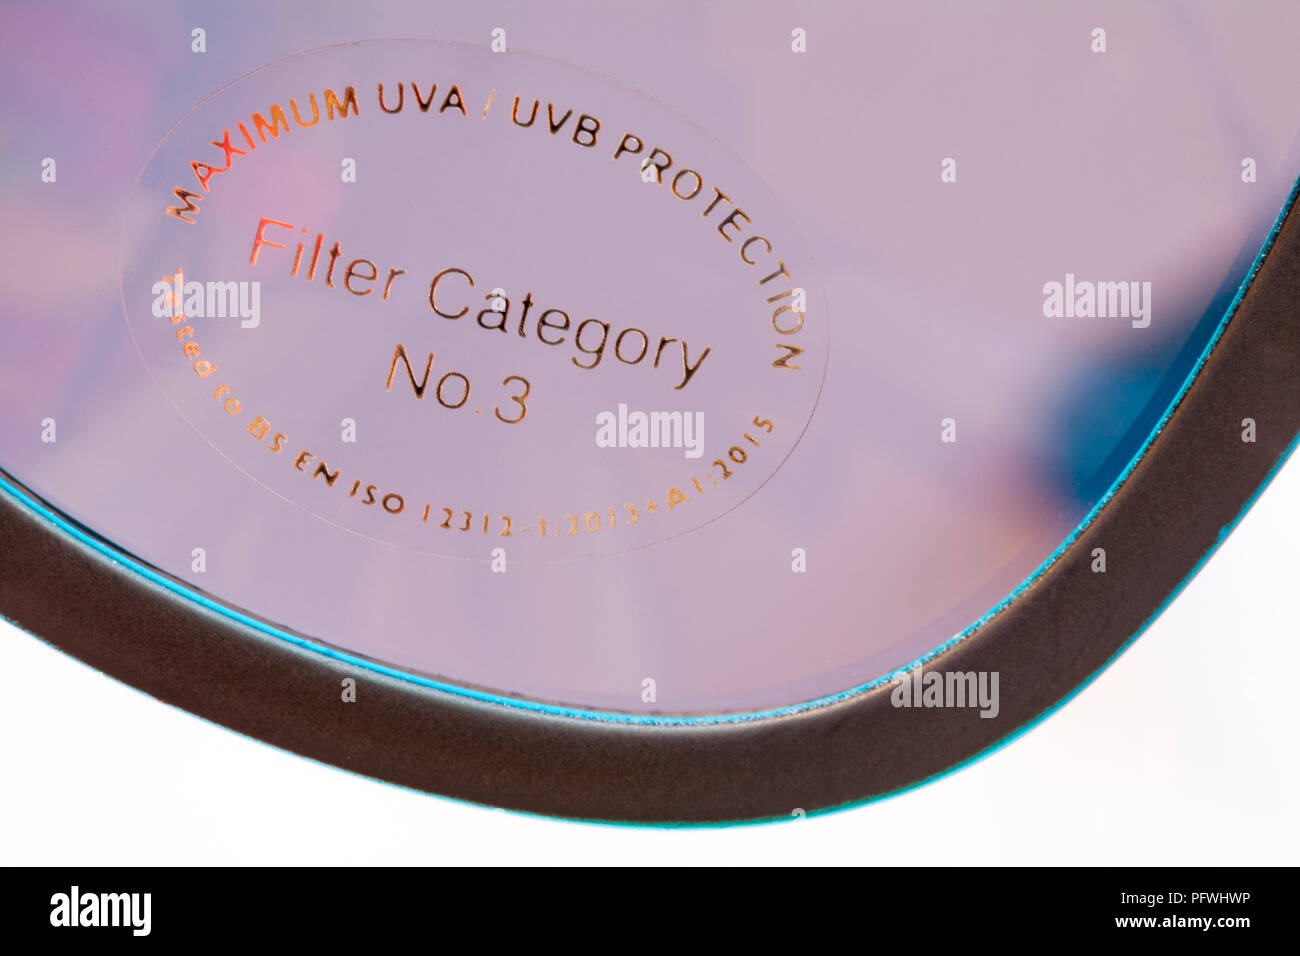 Maximum UVA UVB protection Filter Category No 3 sticker on blue edged  sunglasses Stock Photo - Alamy